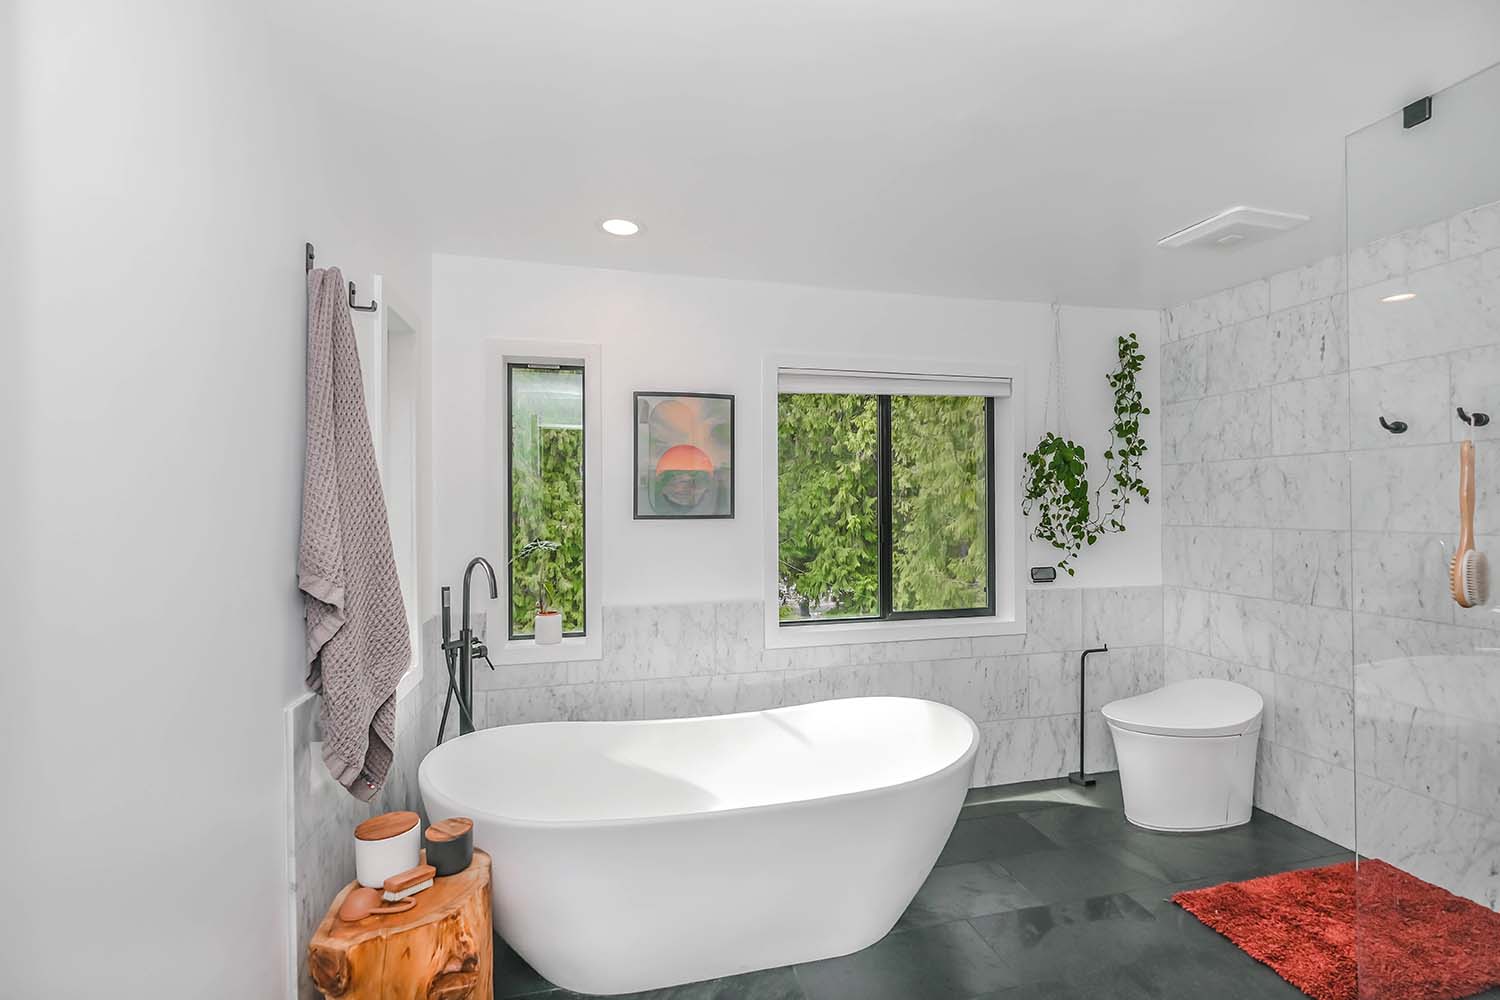 The Best Reliable Bathroom Flooring Ideas on a Budget